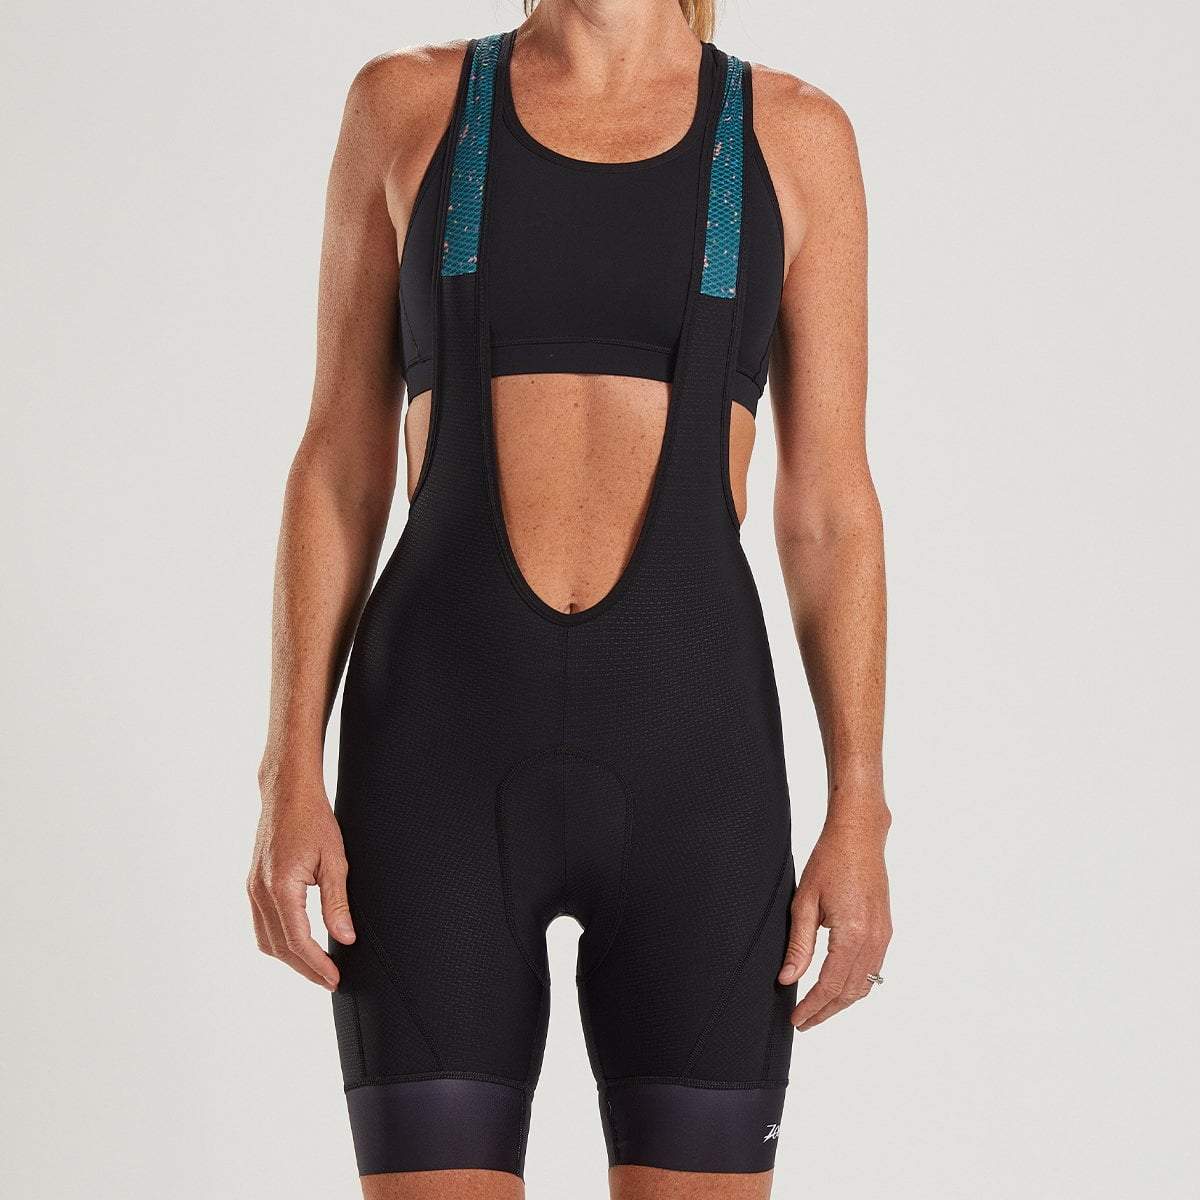 Zoot Sports Womens Recon Cycle Bib - Coal Black